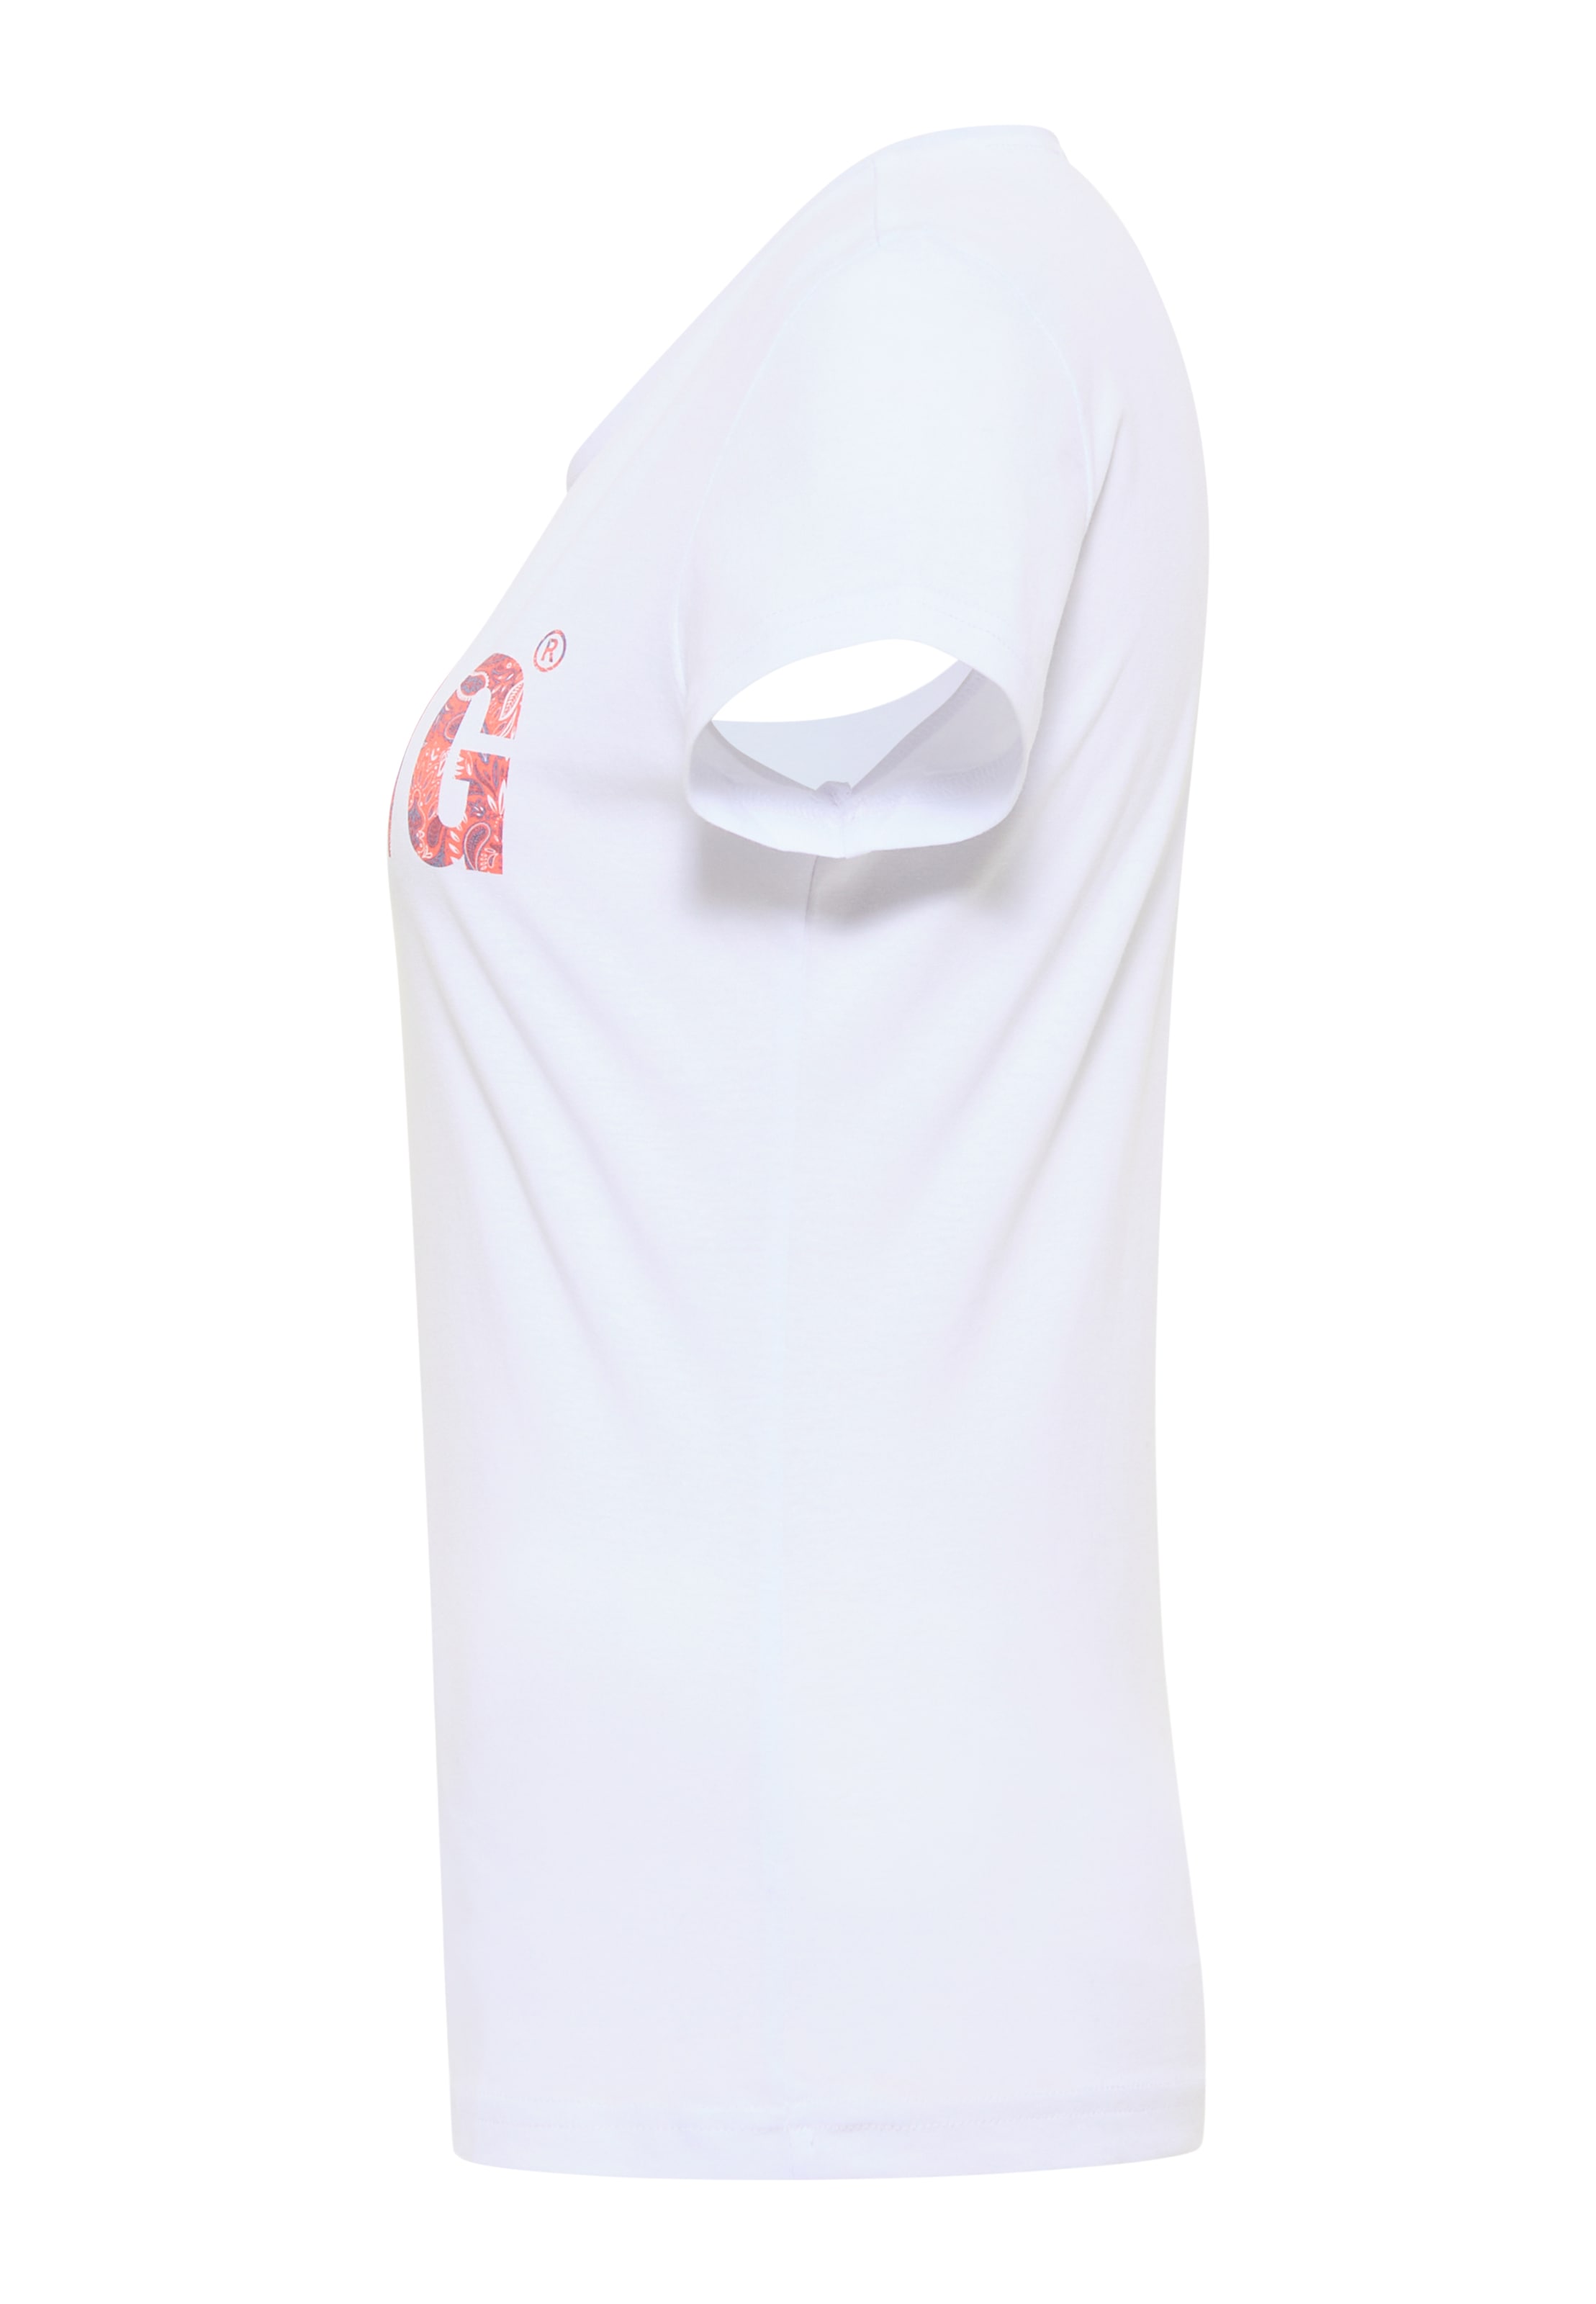 ♕ kaufen »Alexia MUSTANG versandkostenfrei T-Shirt Logo« C